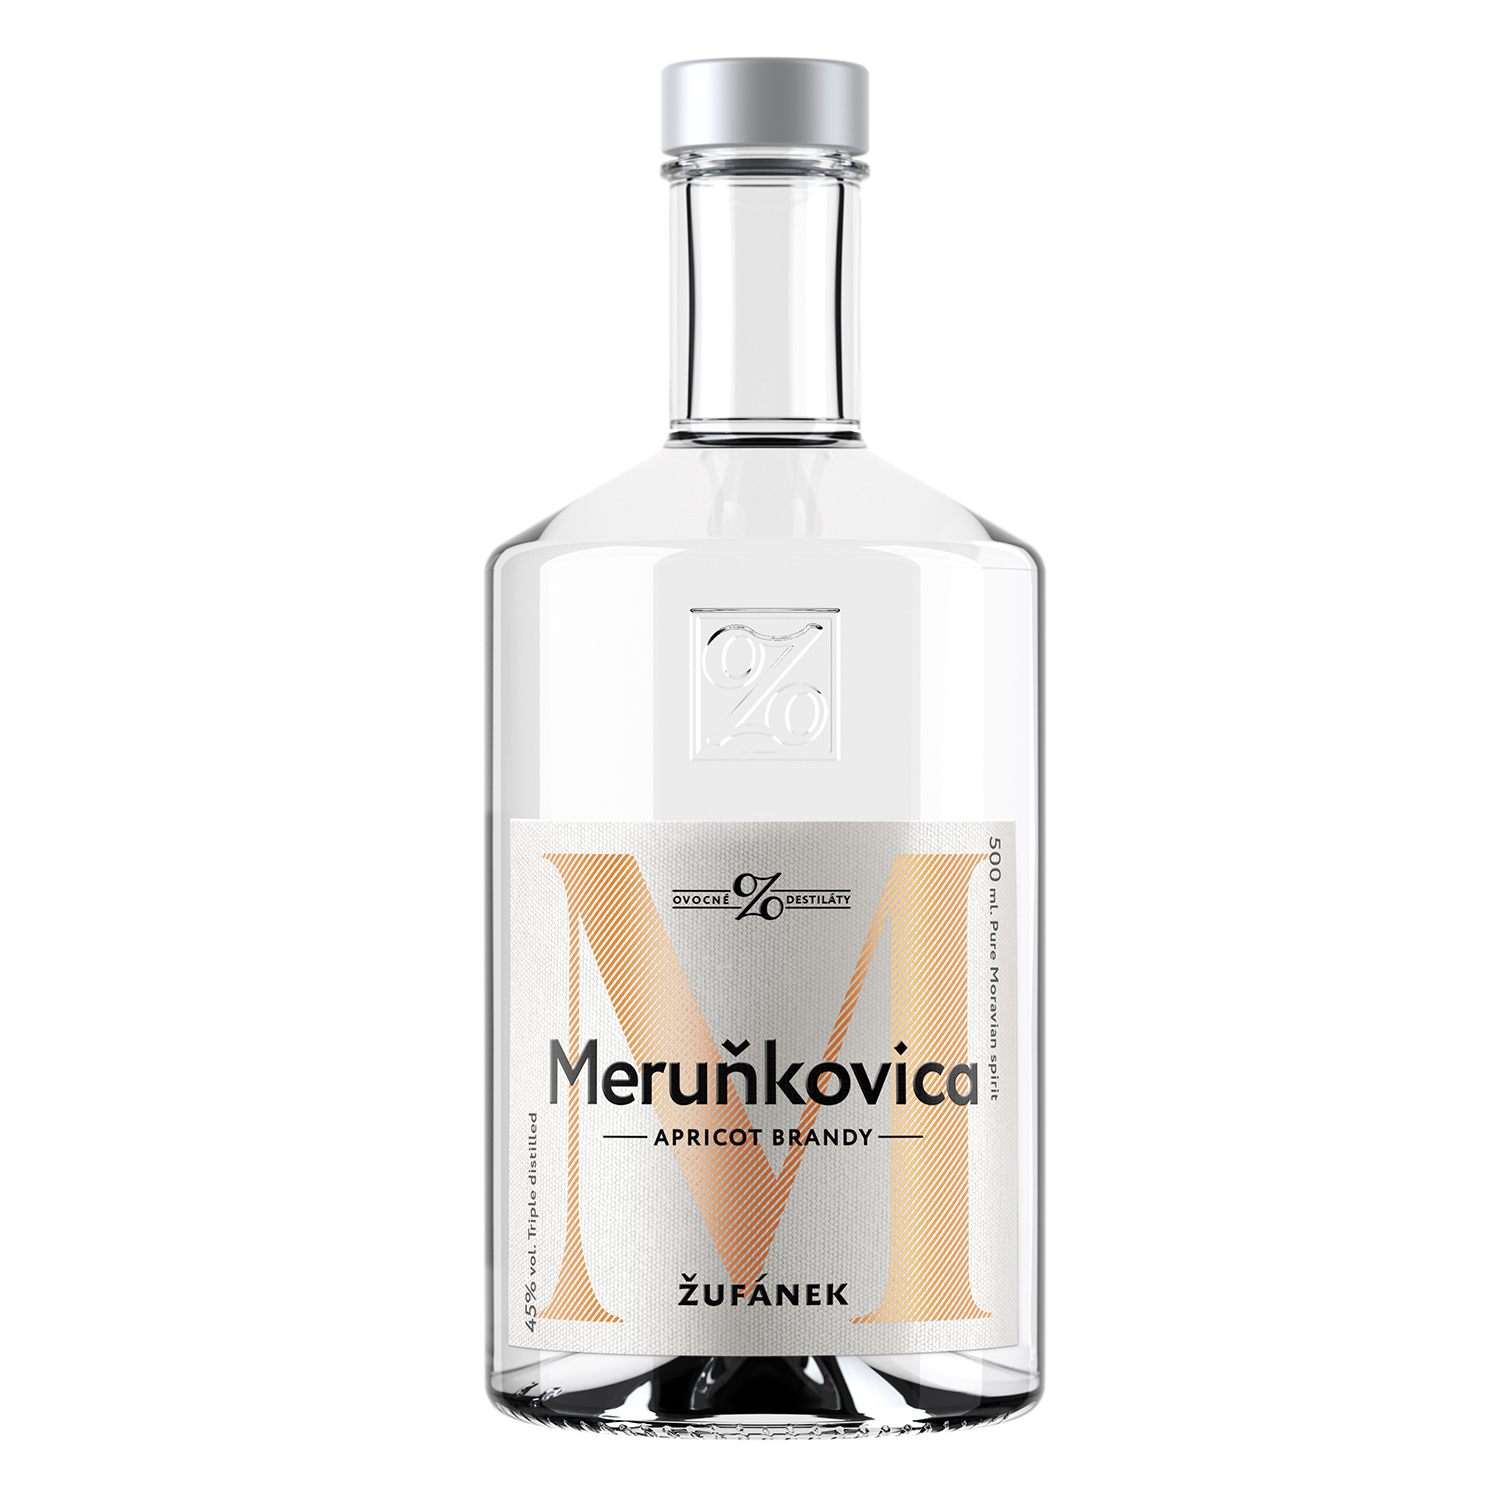 Merunkovica - apricot brandy